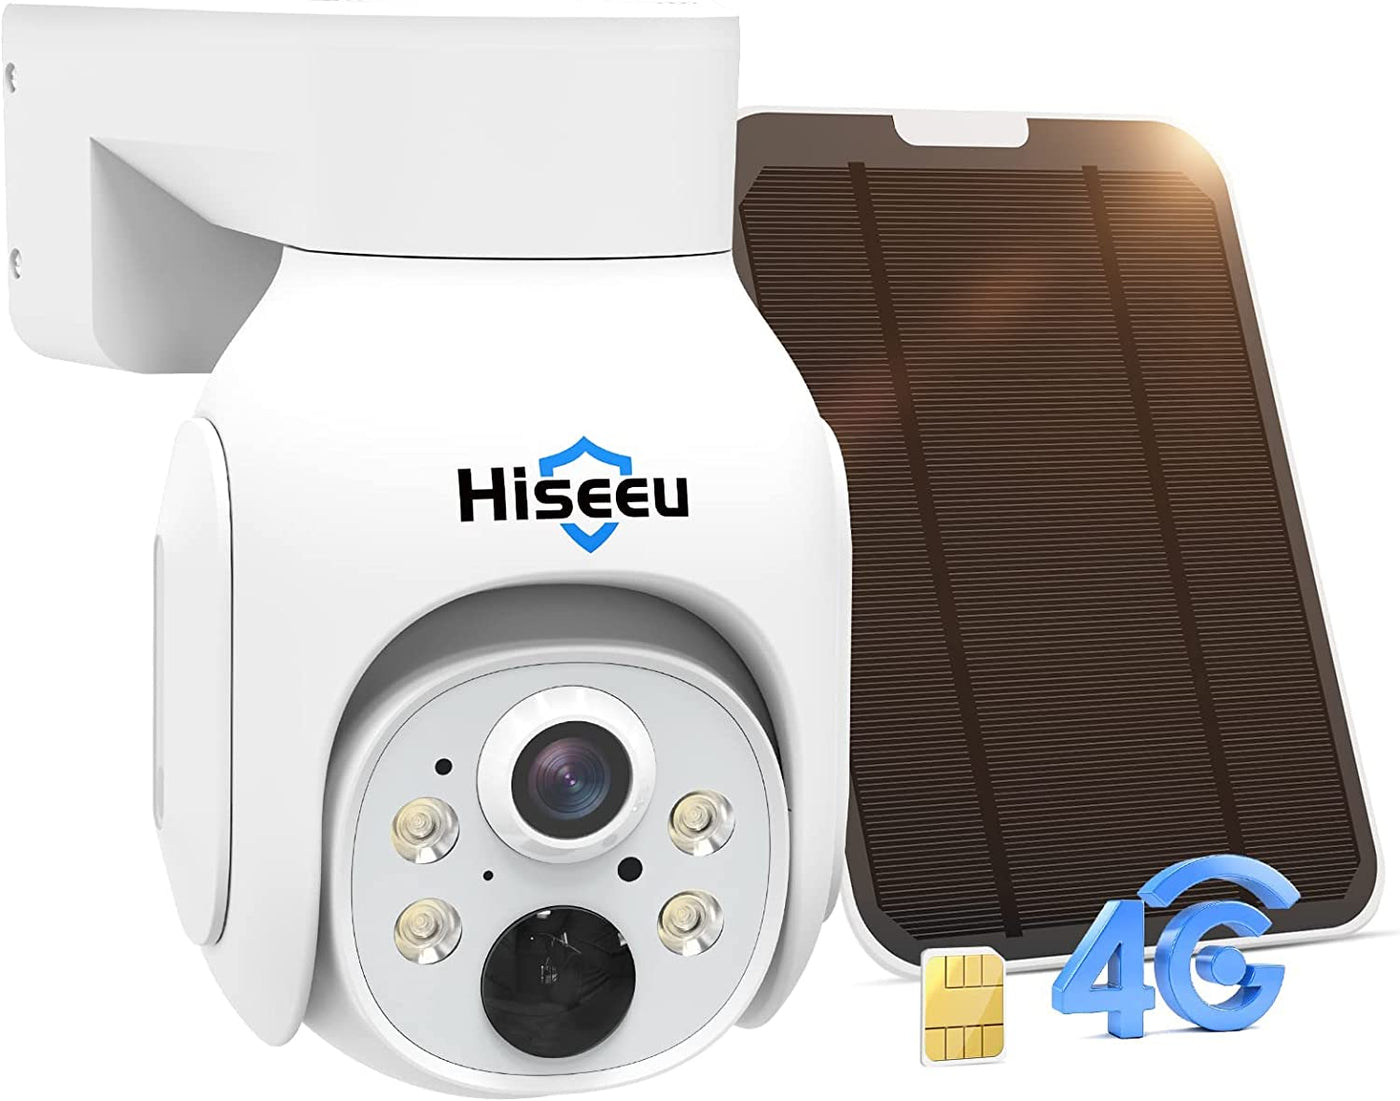 4G 3G Sim wireless CCTV Camera 1080p IP66 Waterproof Outdoor